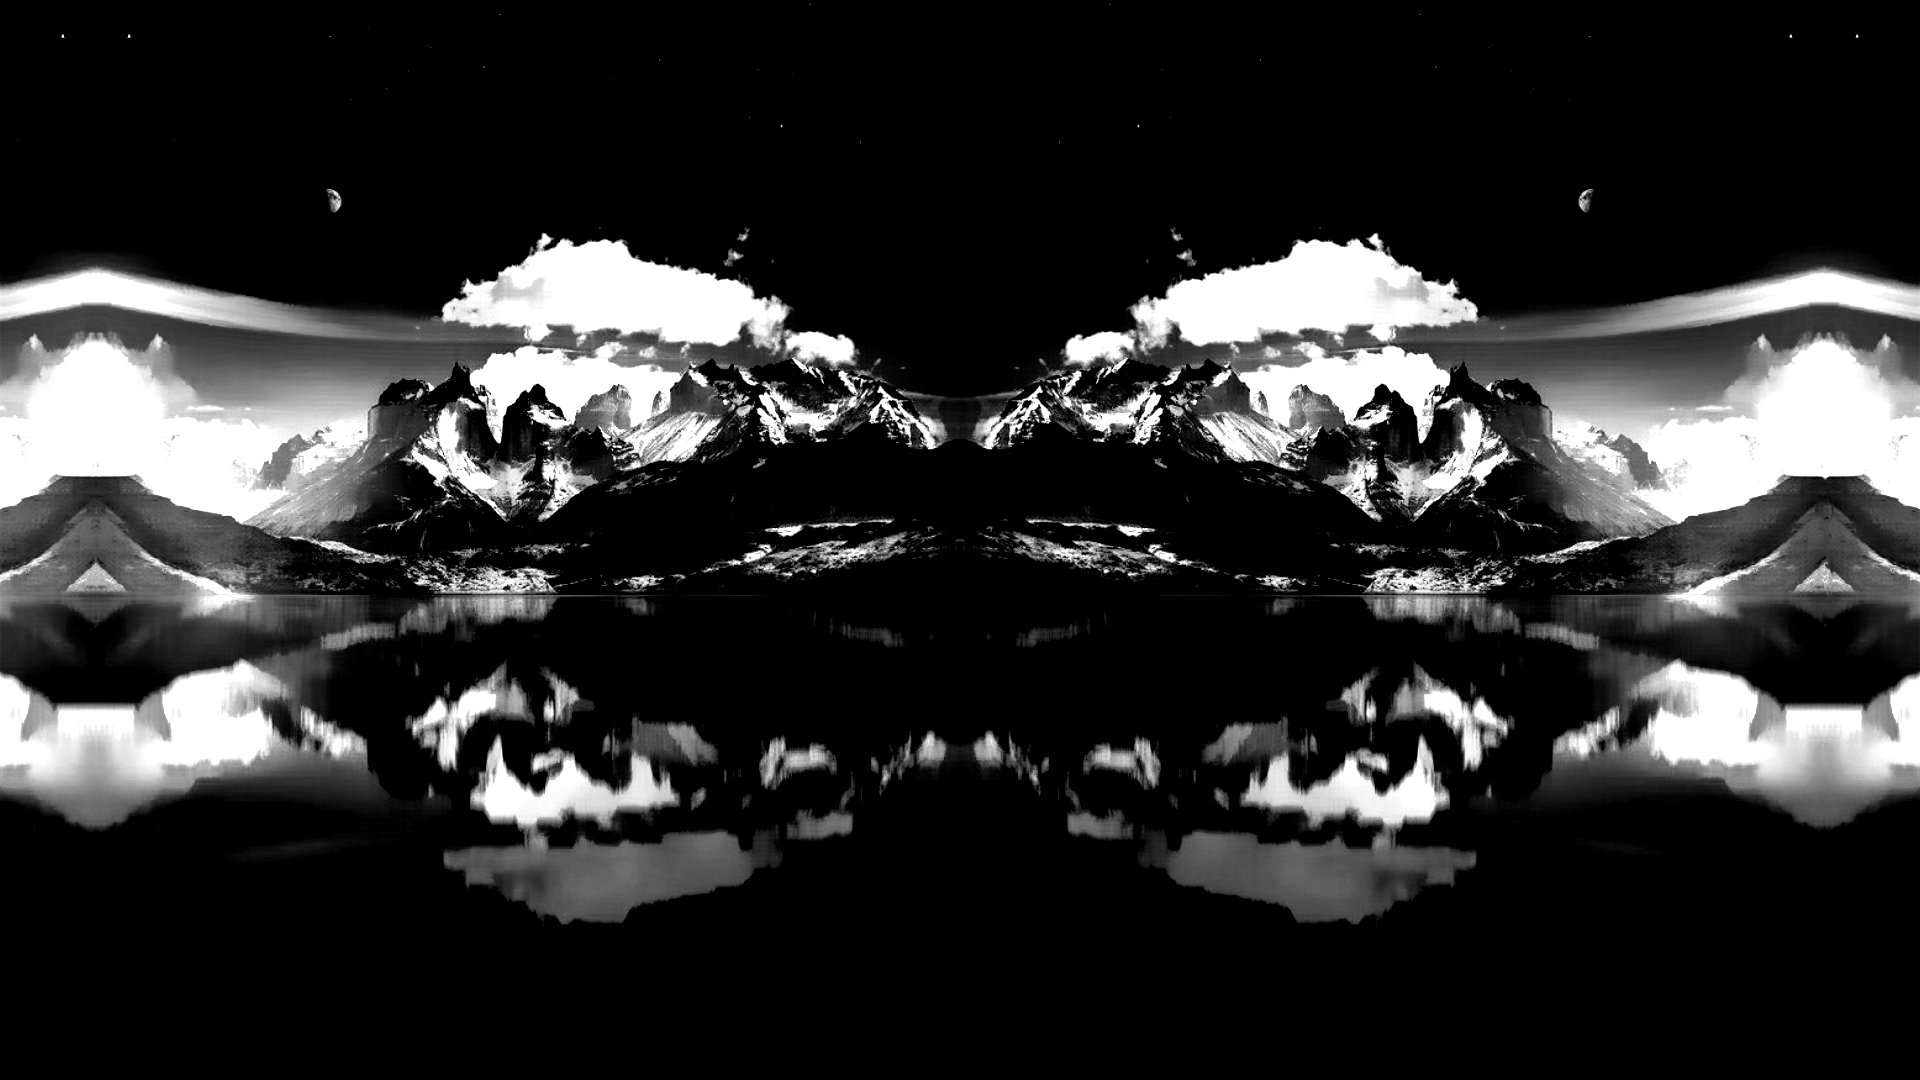 General 1920x1080 mountains nature digital art dark monochrome